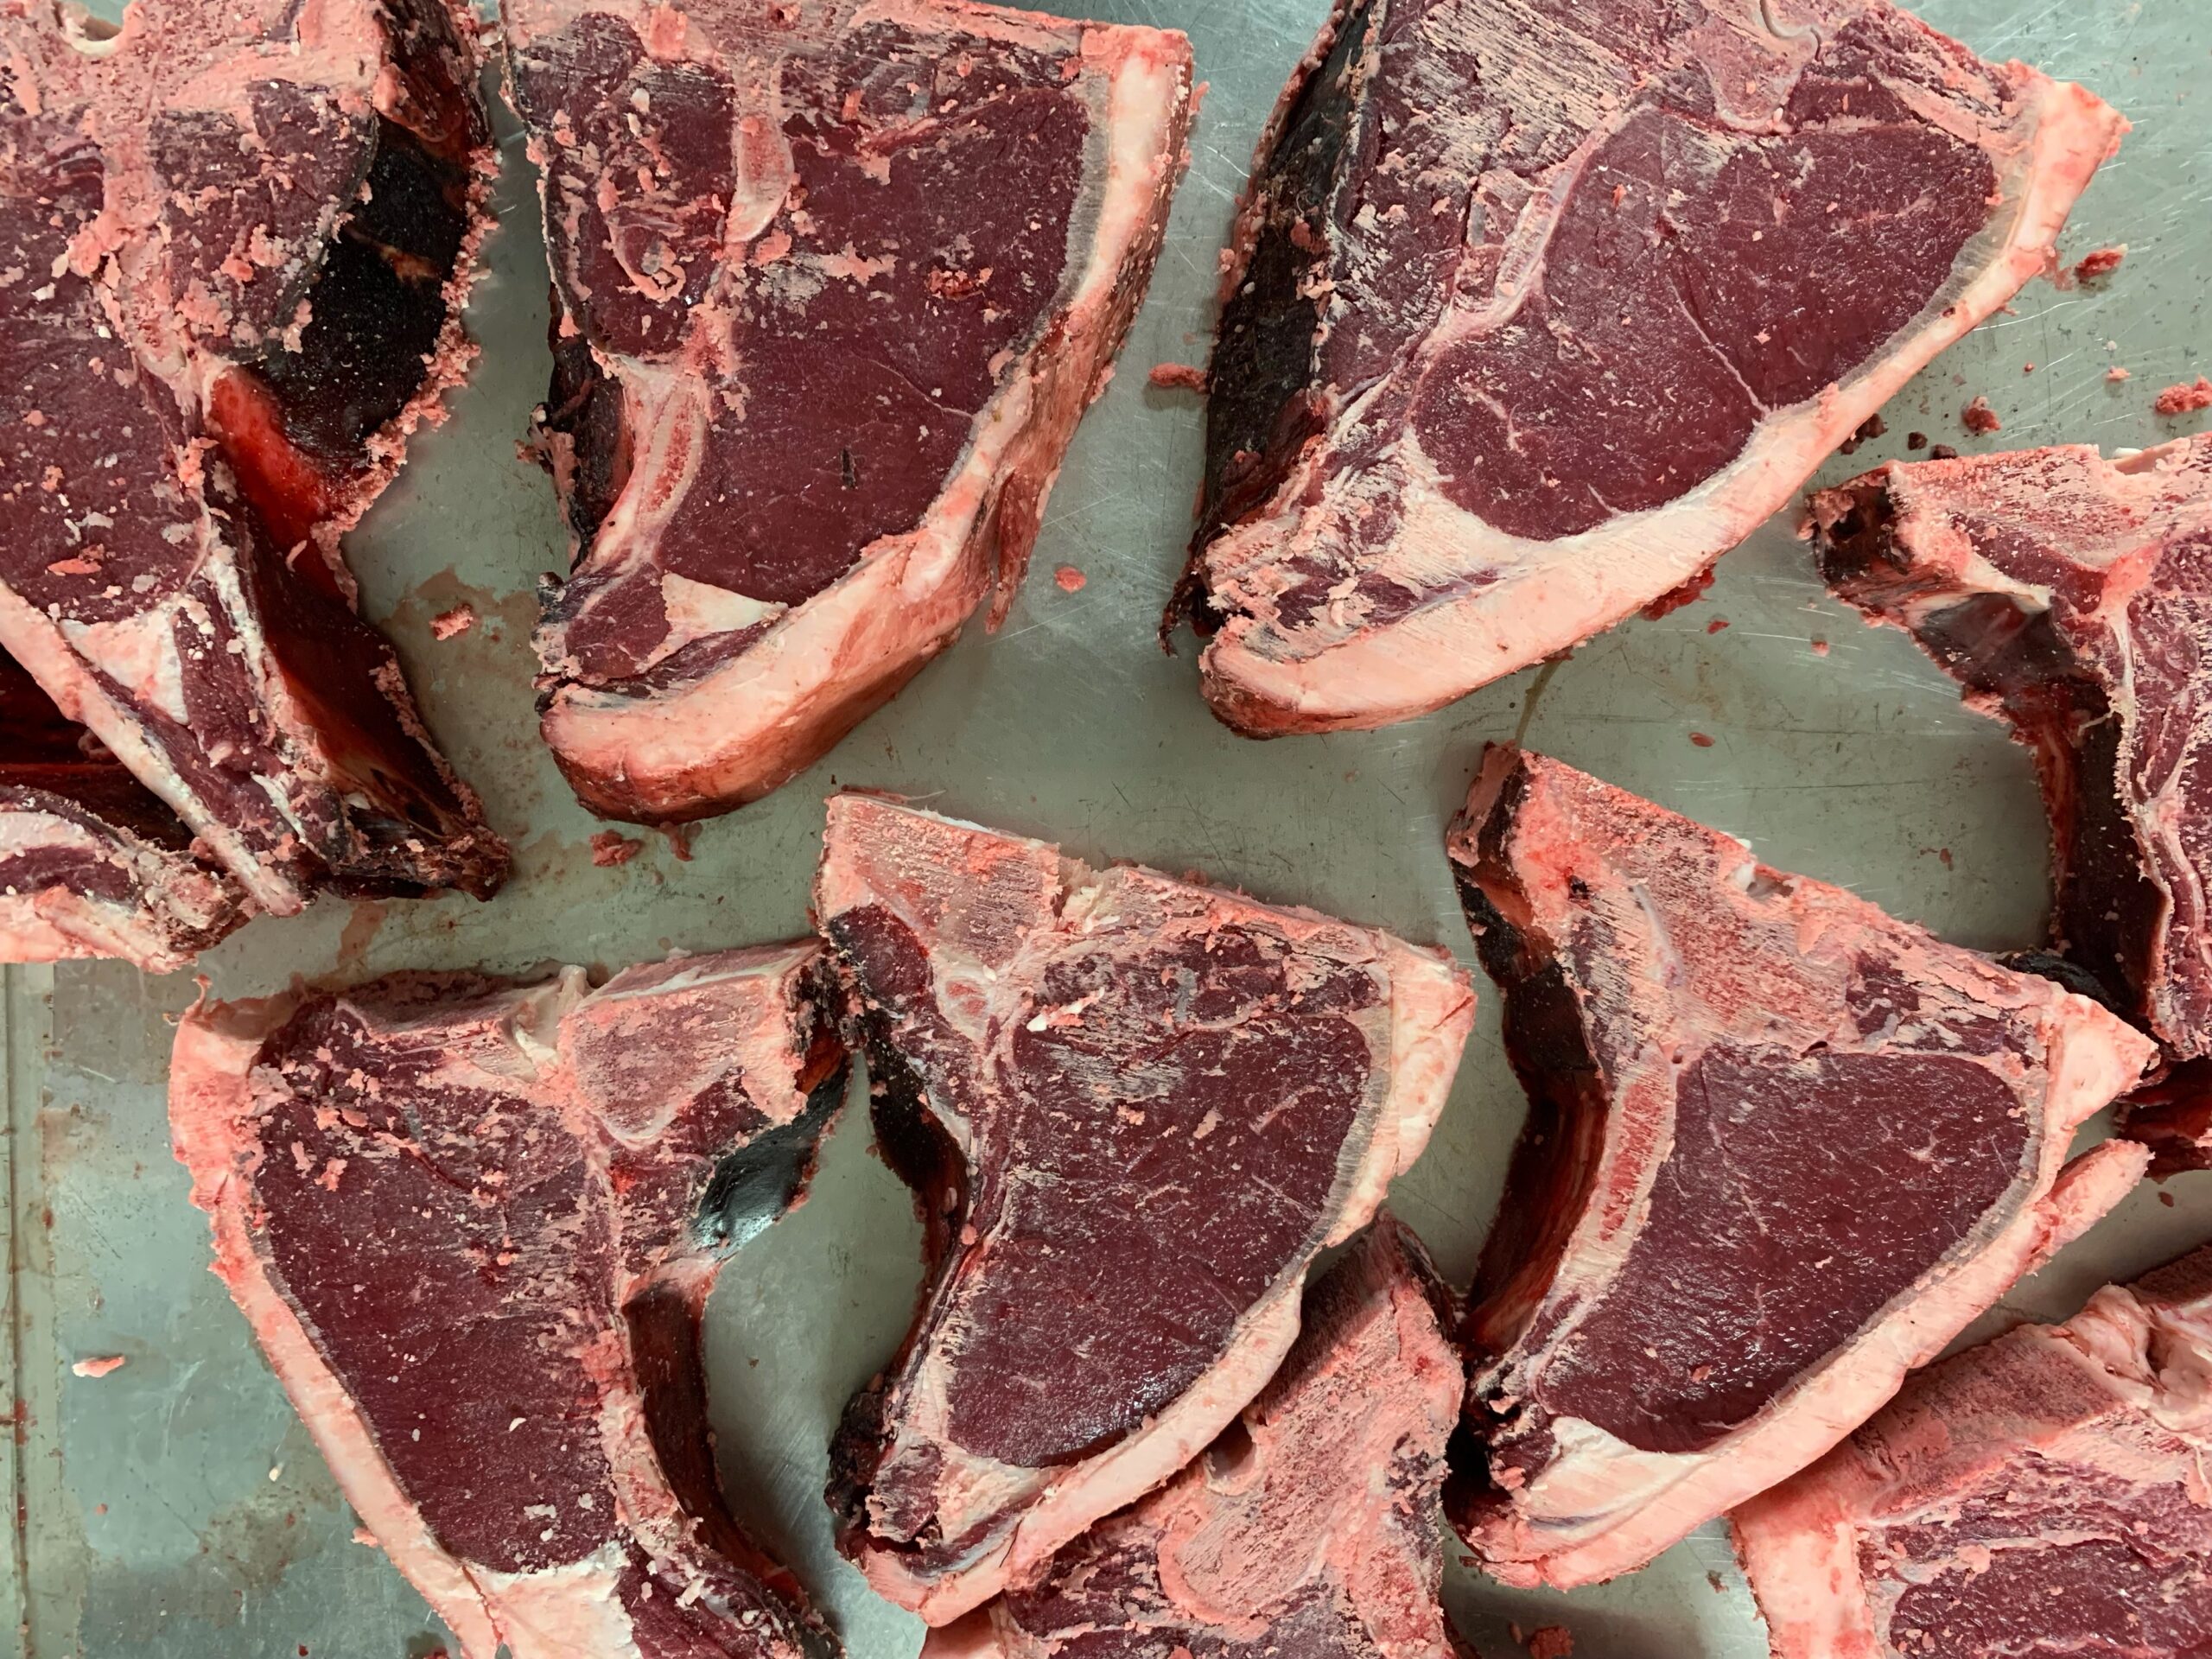 Forget Beef. Moose Makes the Best Steak